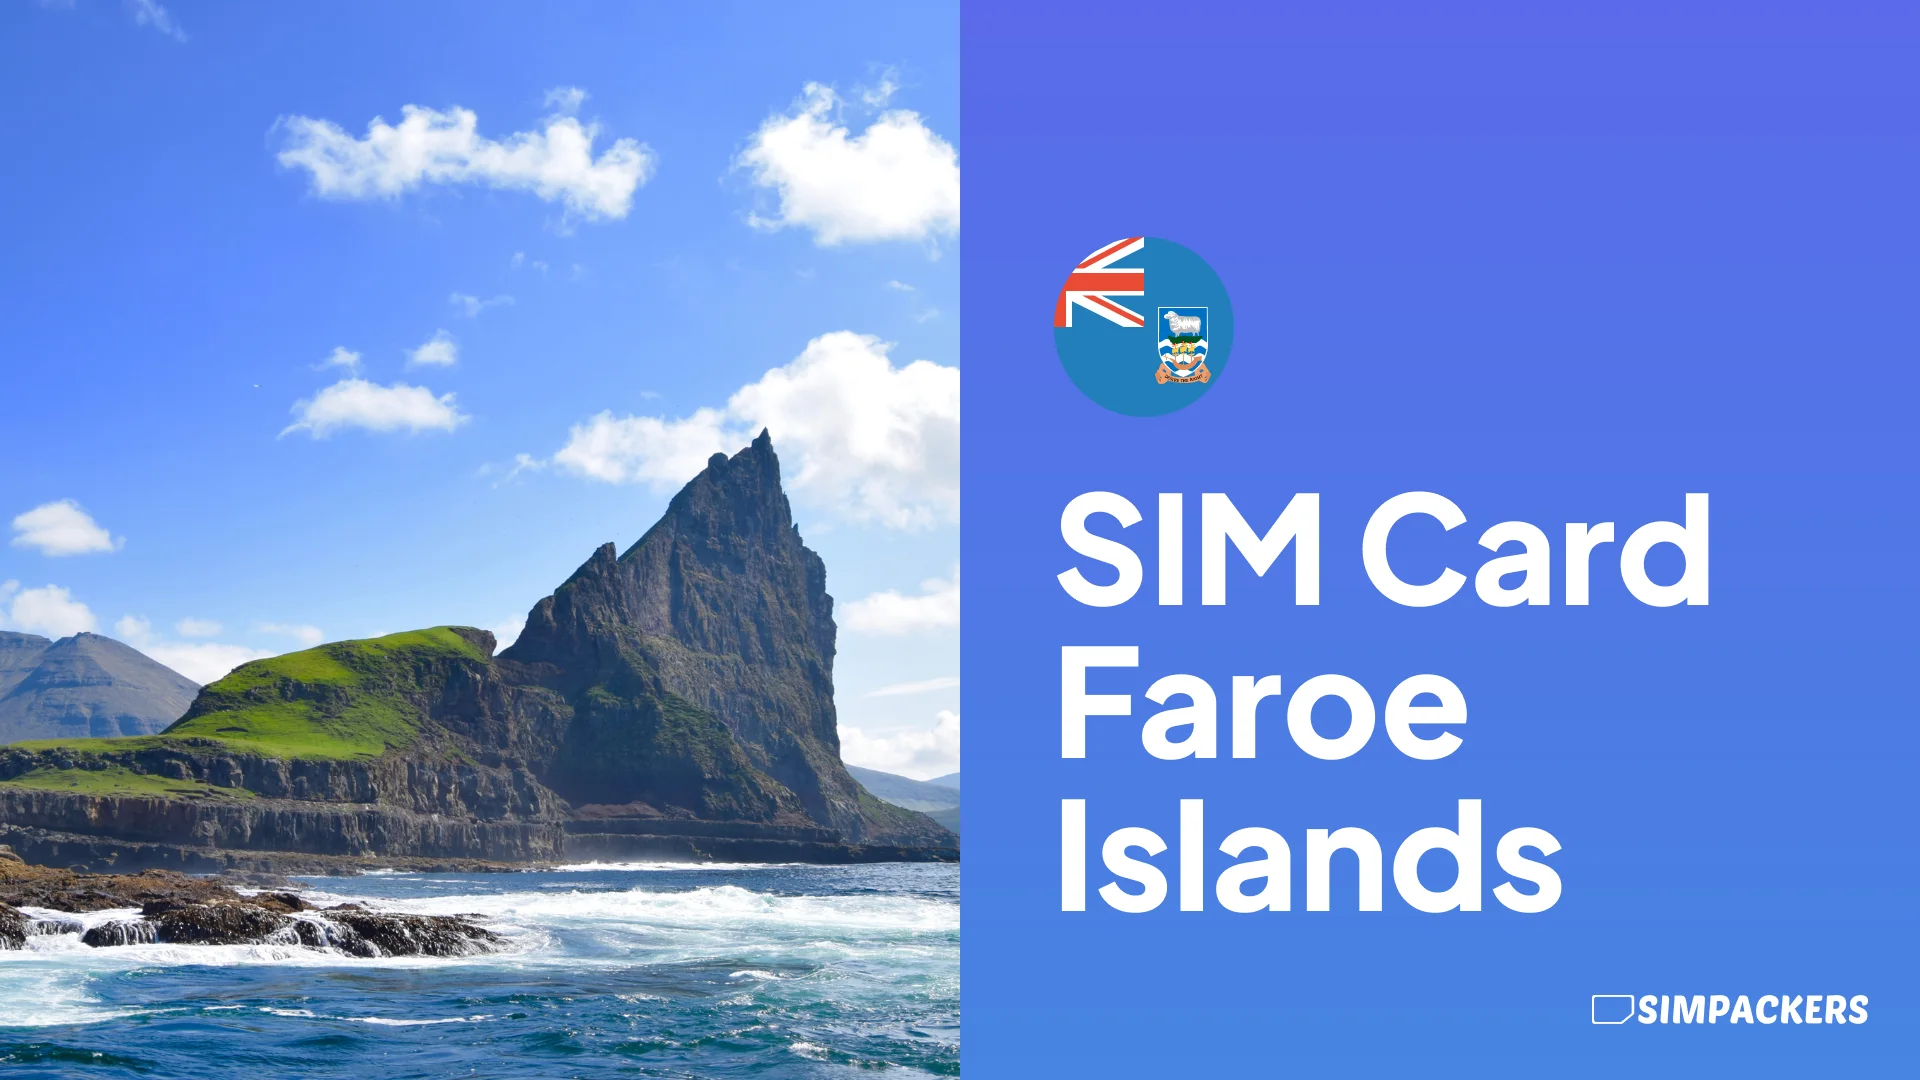 EN/FEATURED_IMAGES/sim-card-faroe-islands.webp